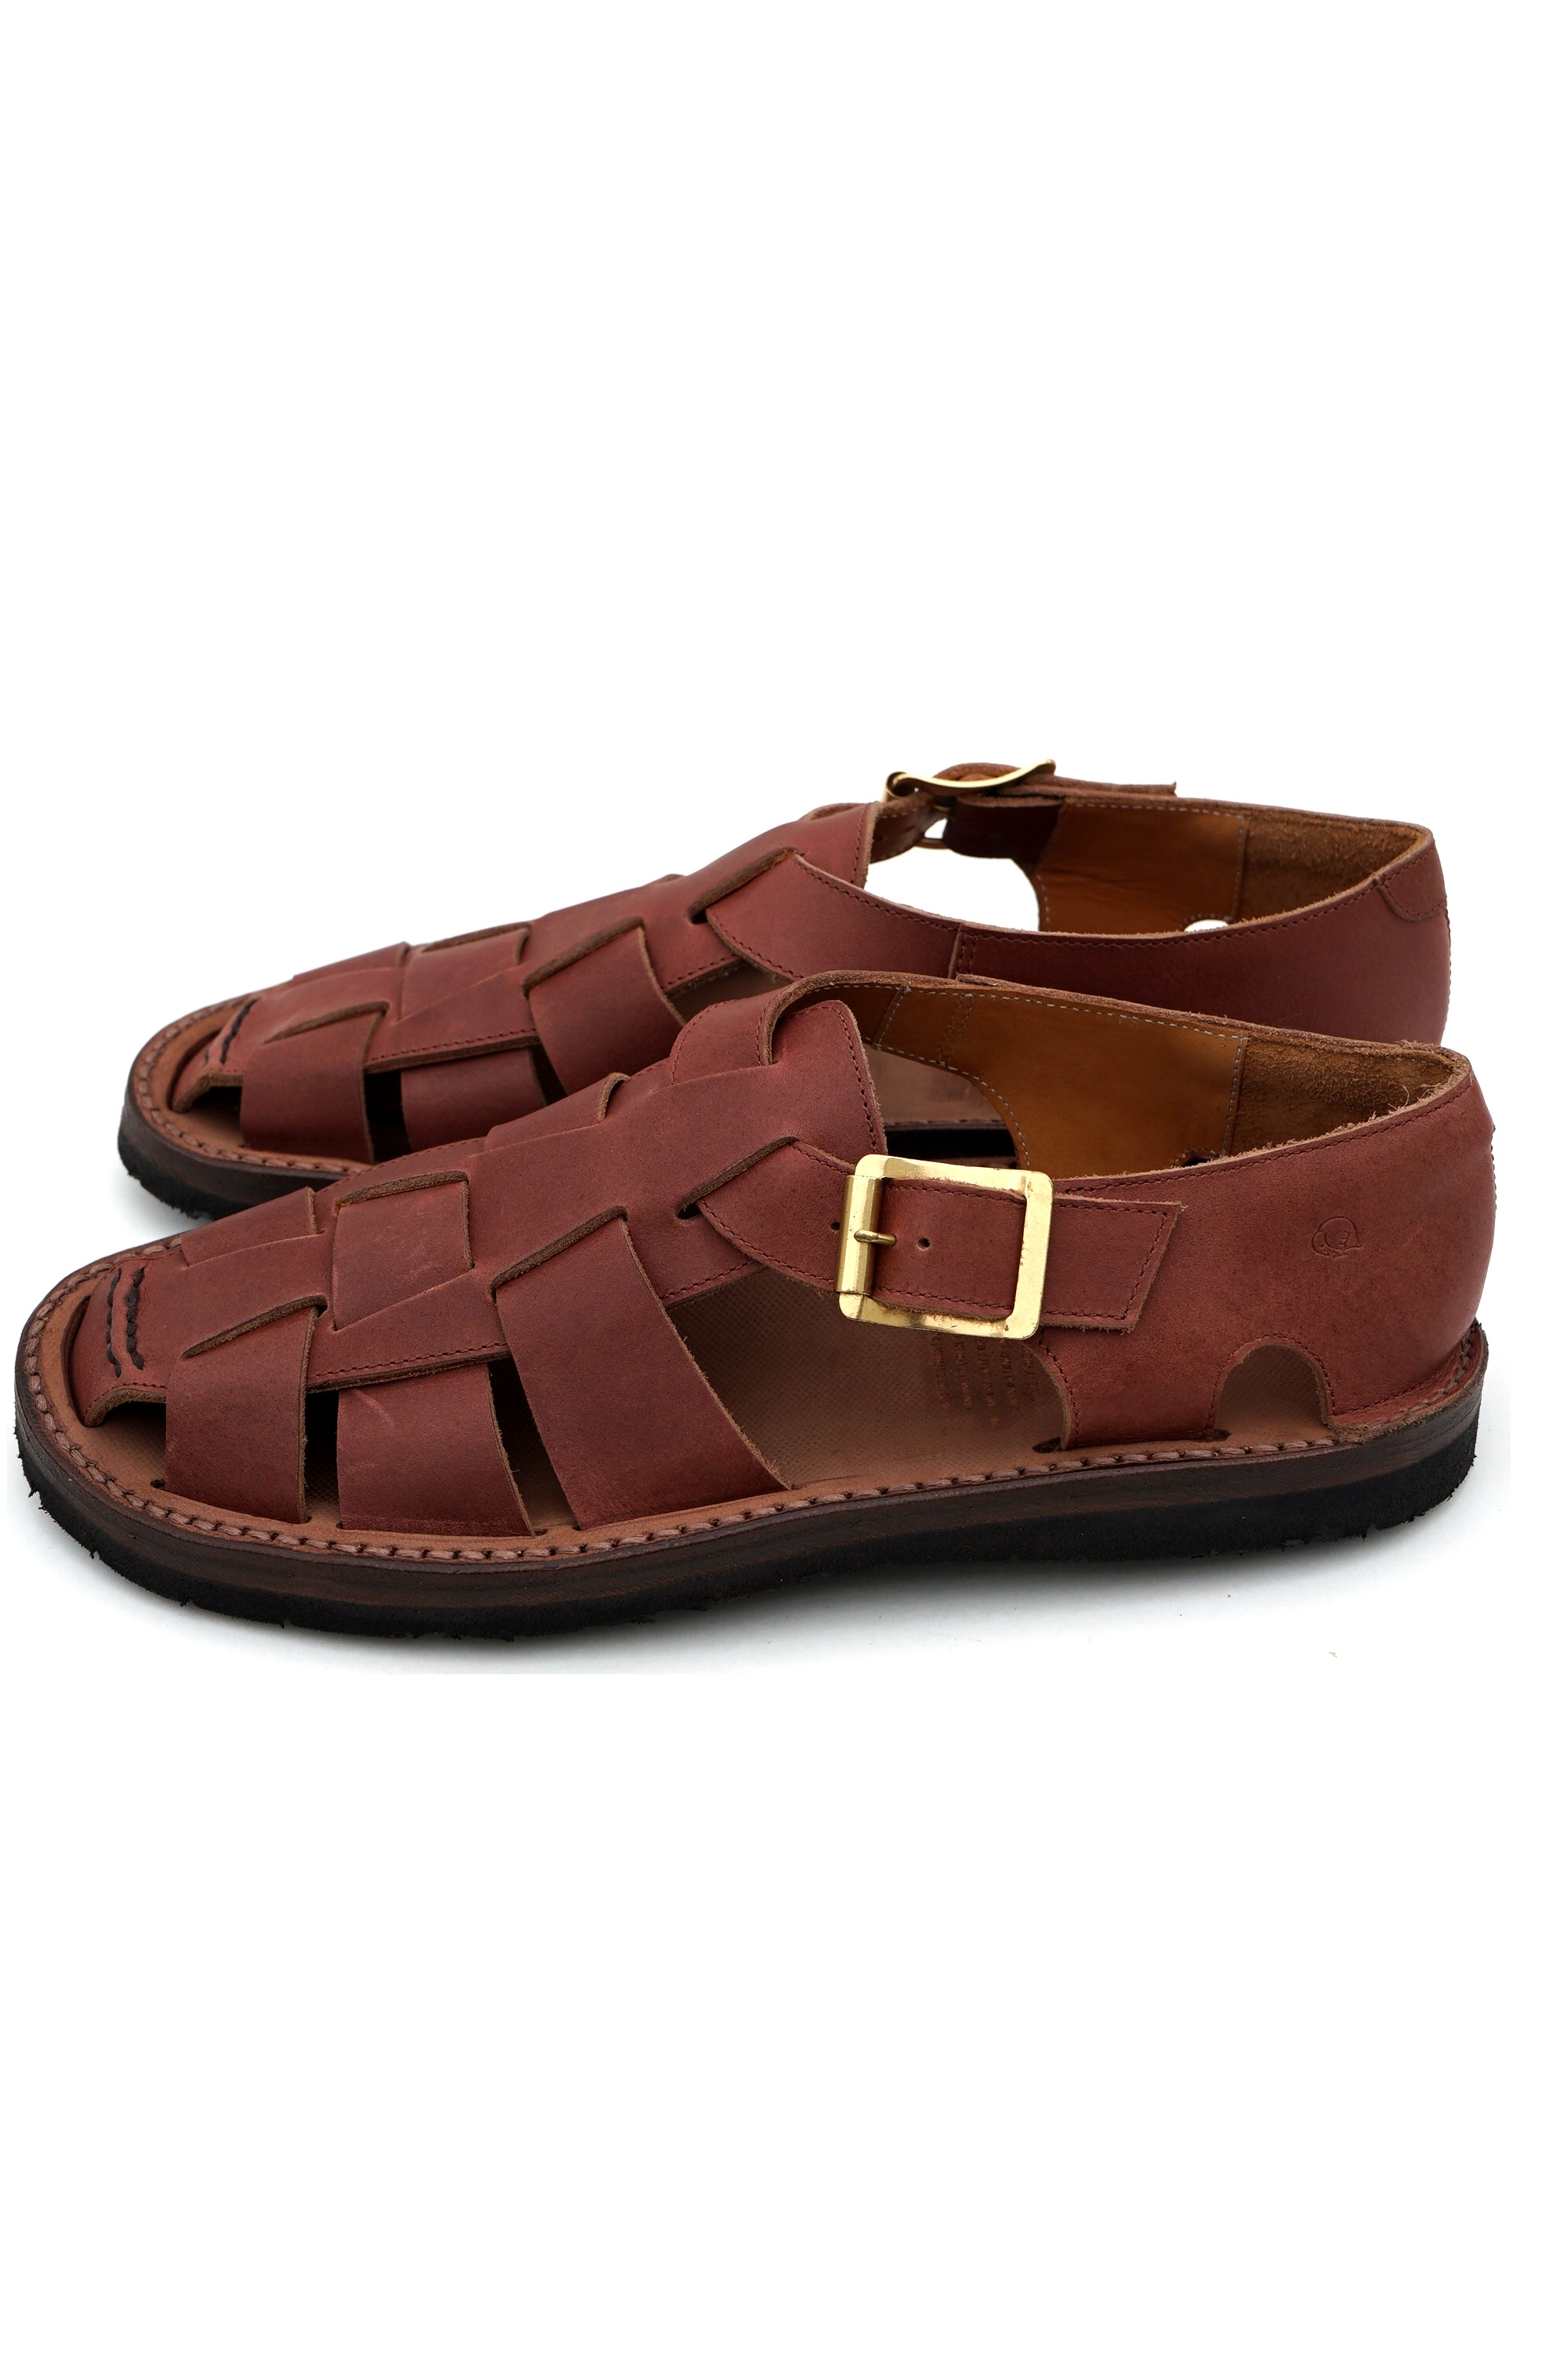 Tokyo Sandals(トーキョーサンダル) “GURKA SANDAL” #TS-C15 / BROWN 